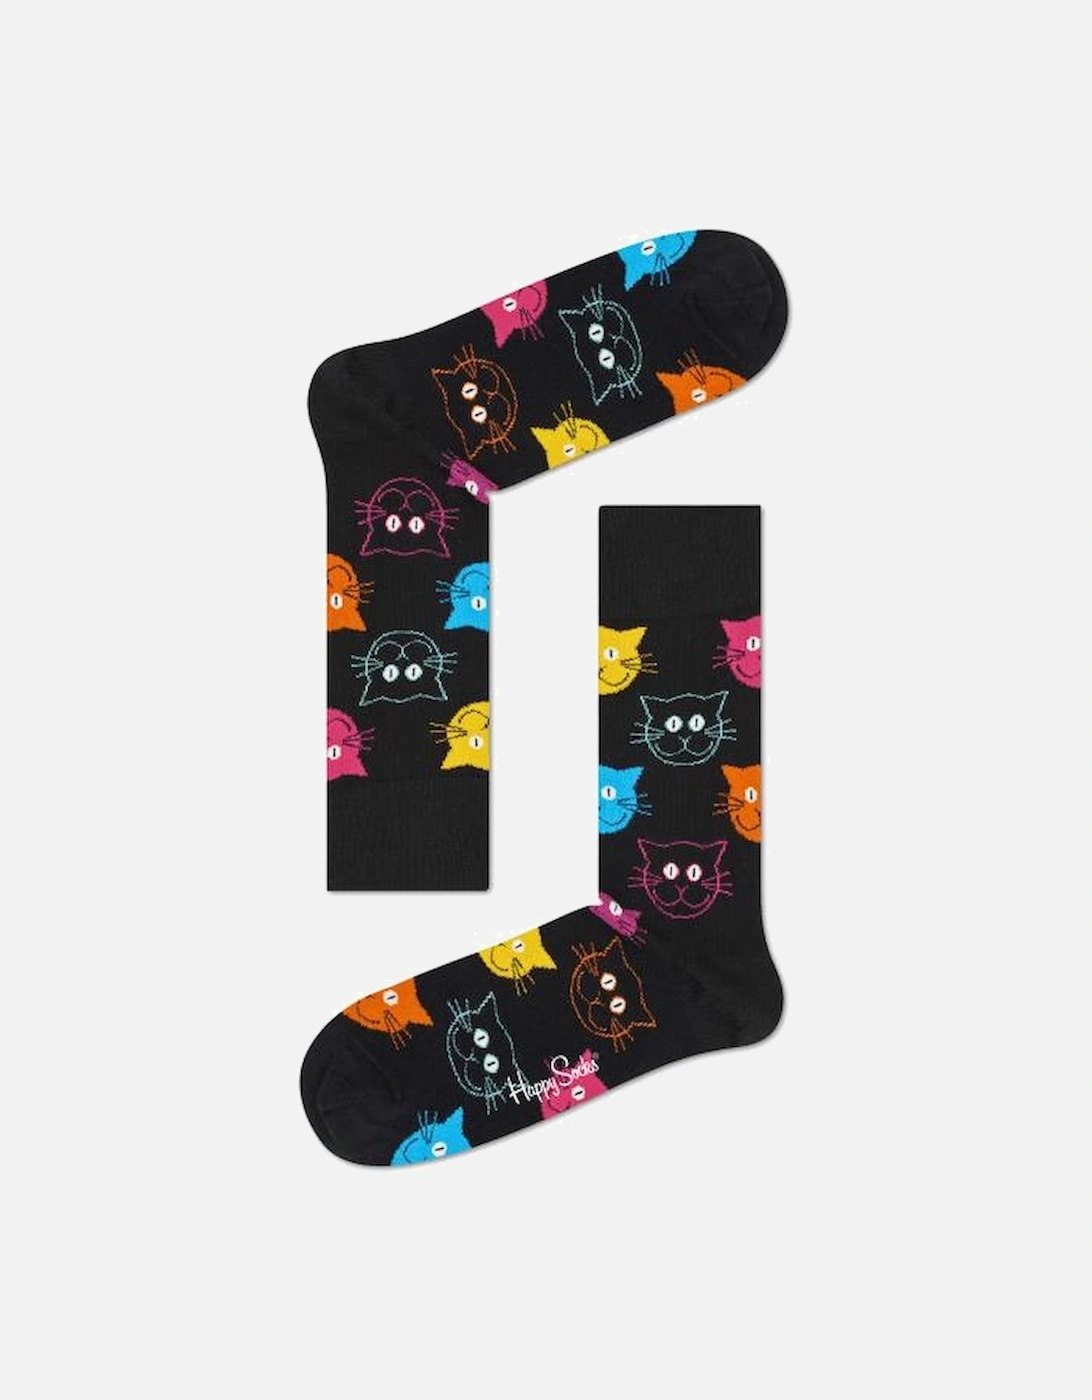 Colourful Cats Socks, Black/multi